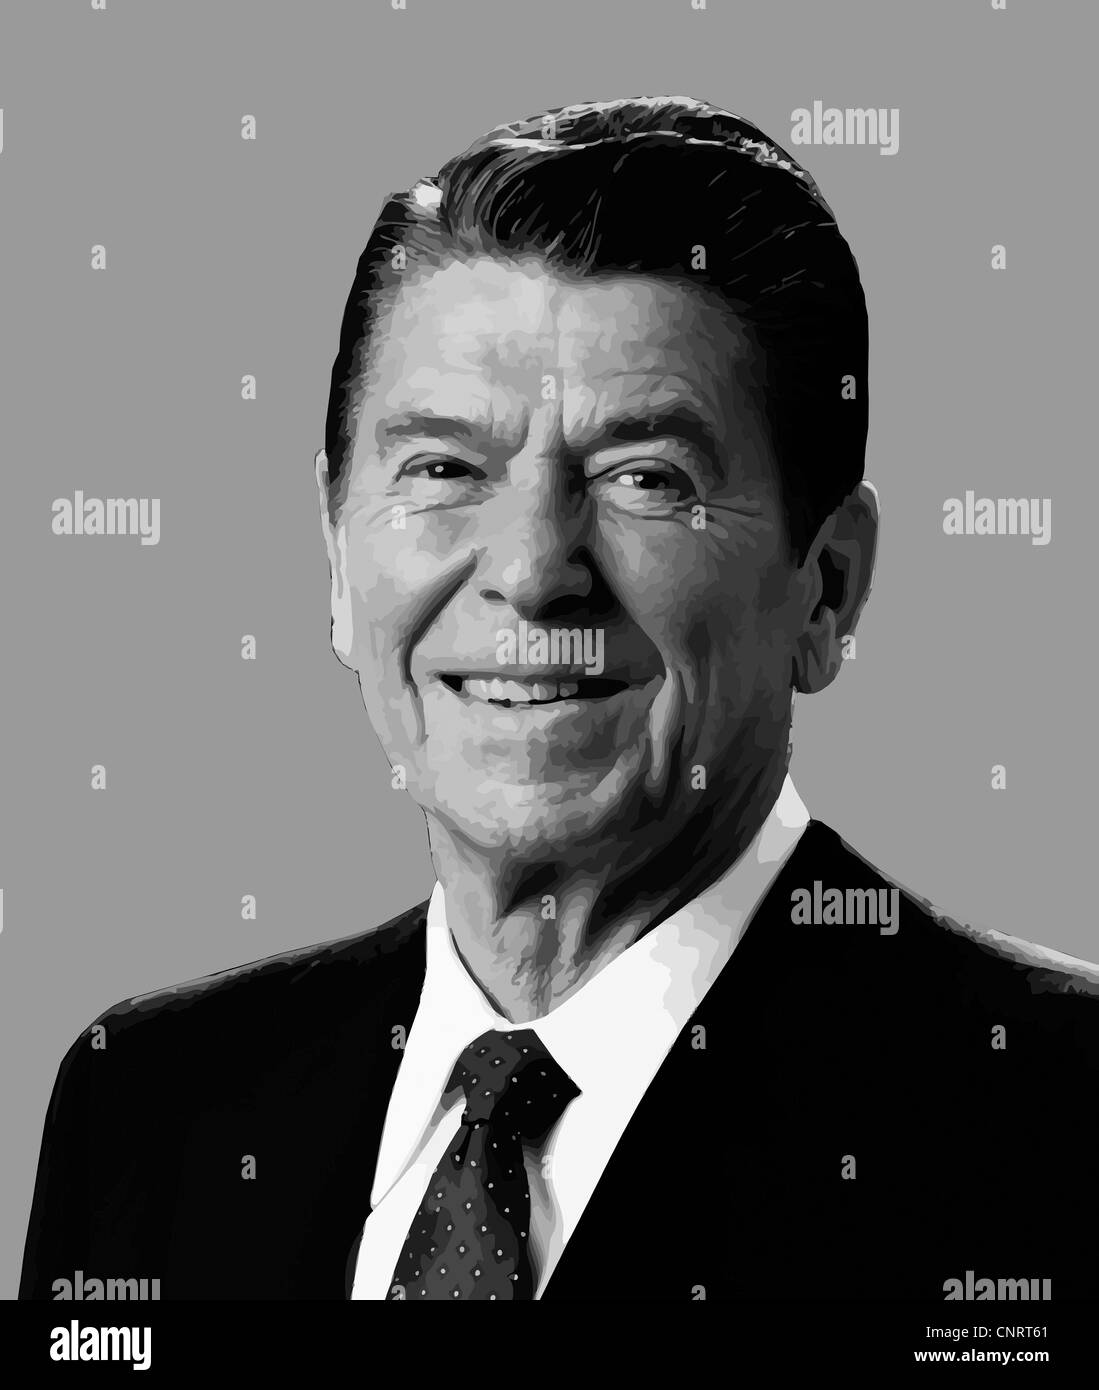 Portrait de scénario de Ronald Reagan. Banque D'Images